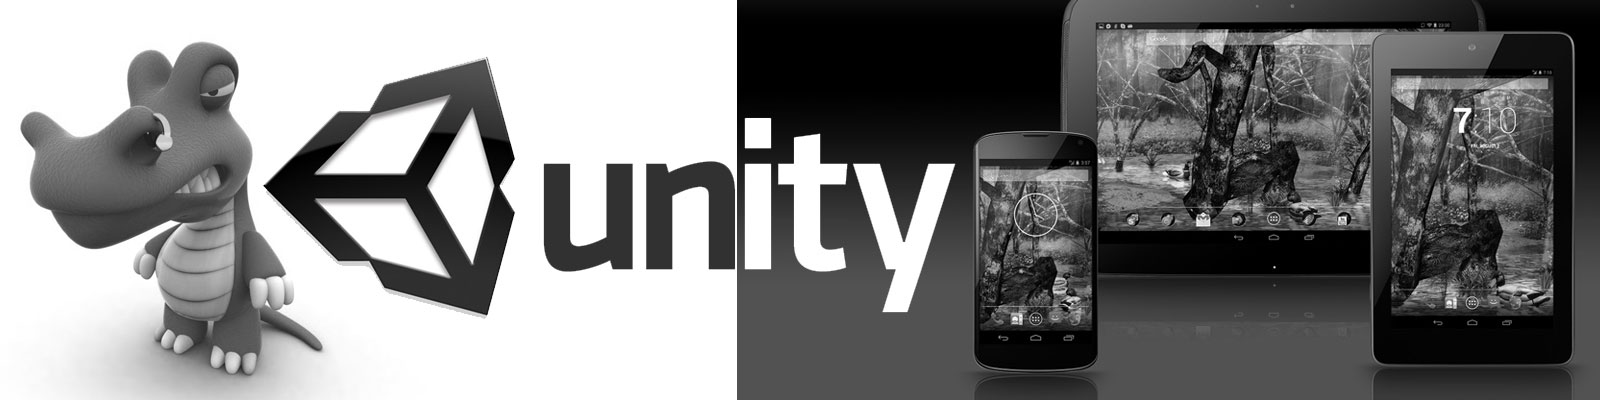 unity 3d game development